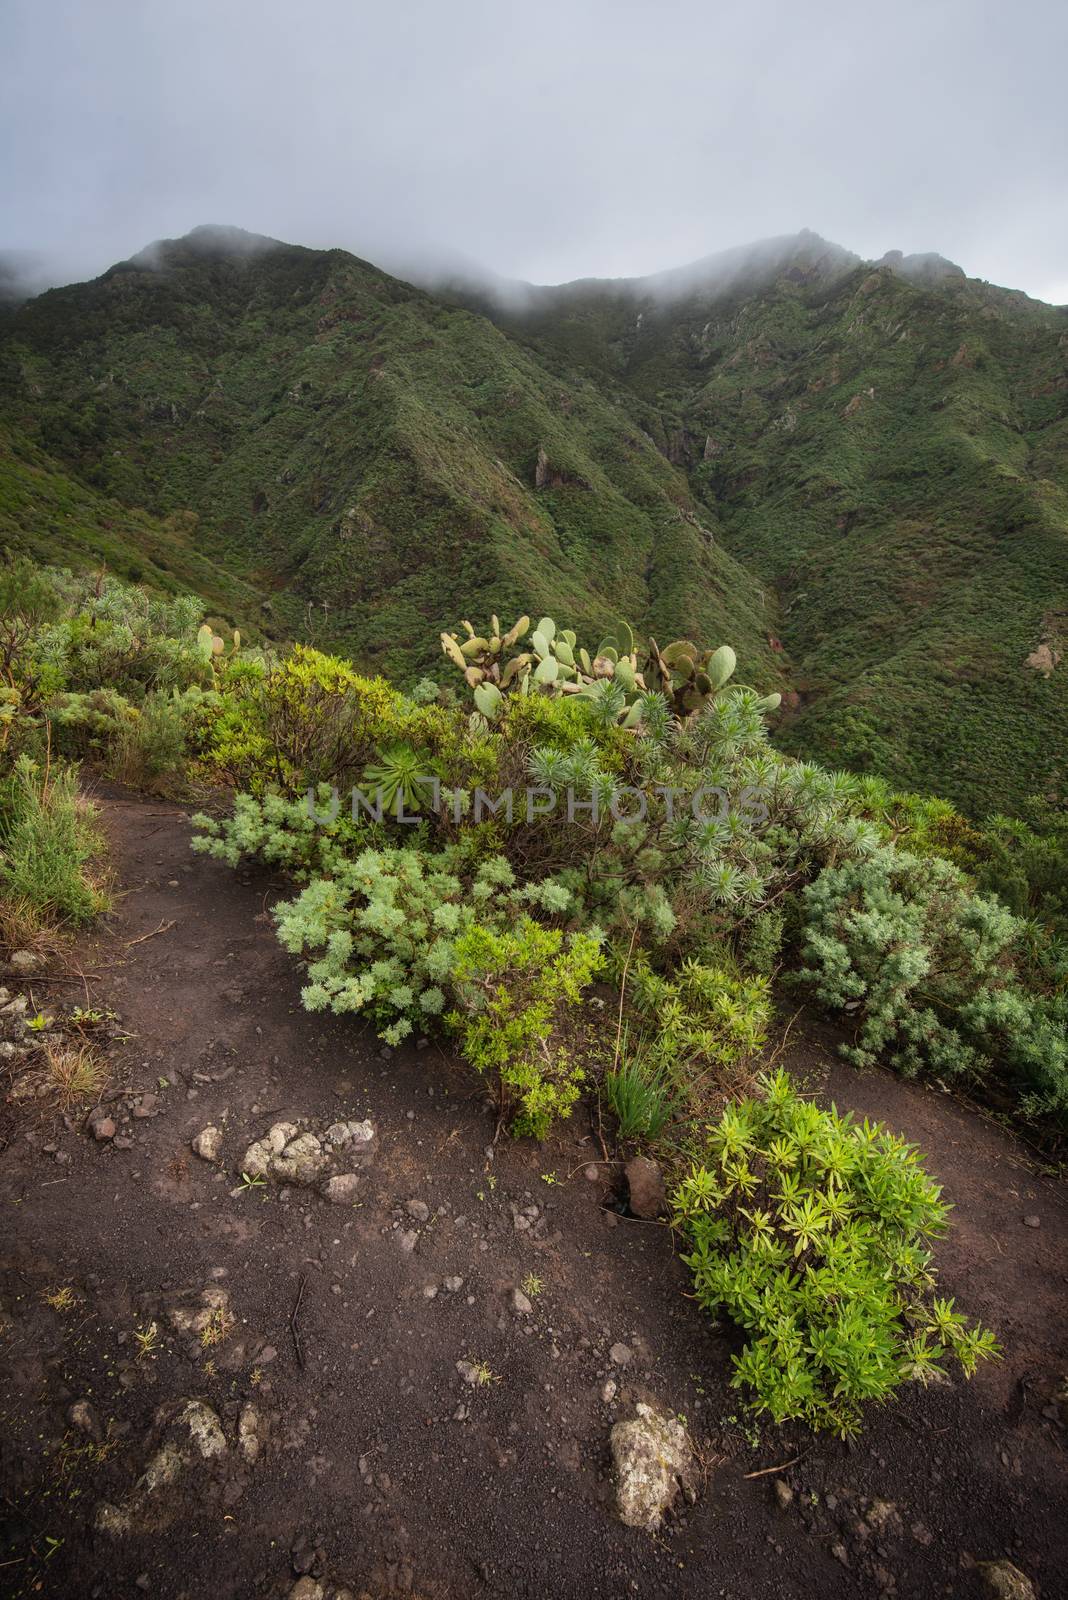 Anaga mountains in Tenerife island, Canary islands, Spain. by HERRAEZ